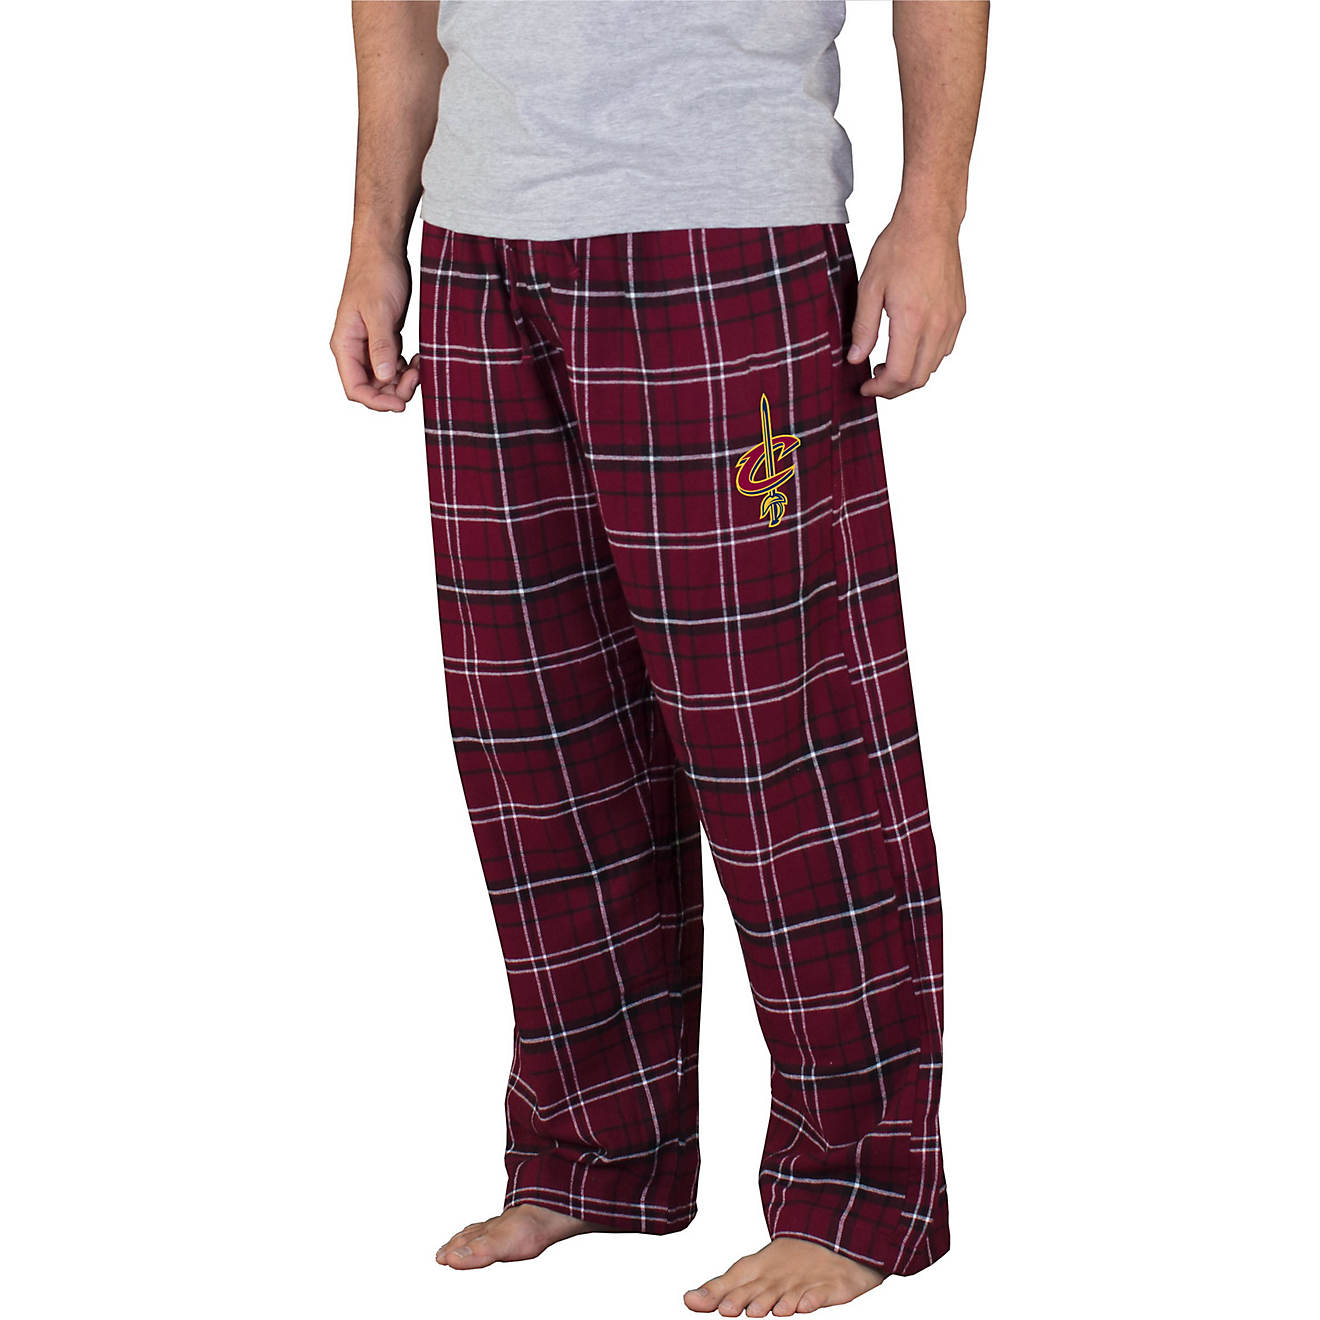 Concepts Sport Cleveland Cavaliers Mens Pajama Pants Plaid Pajama Bottoms 